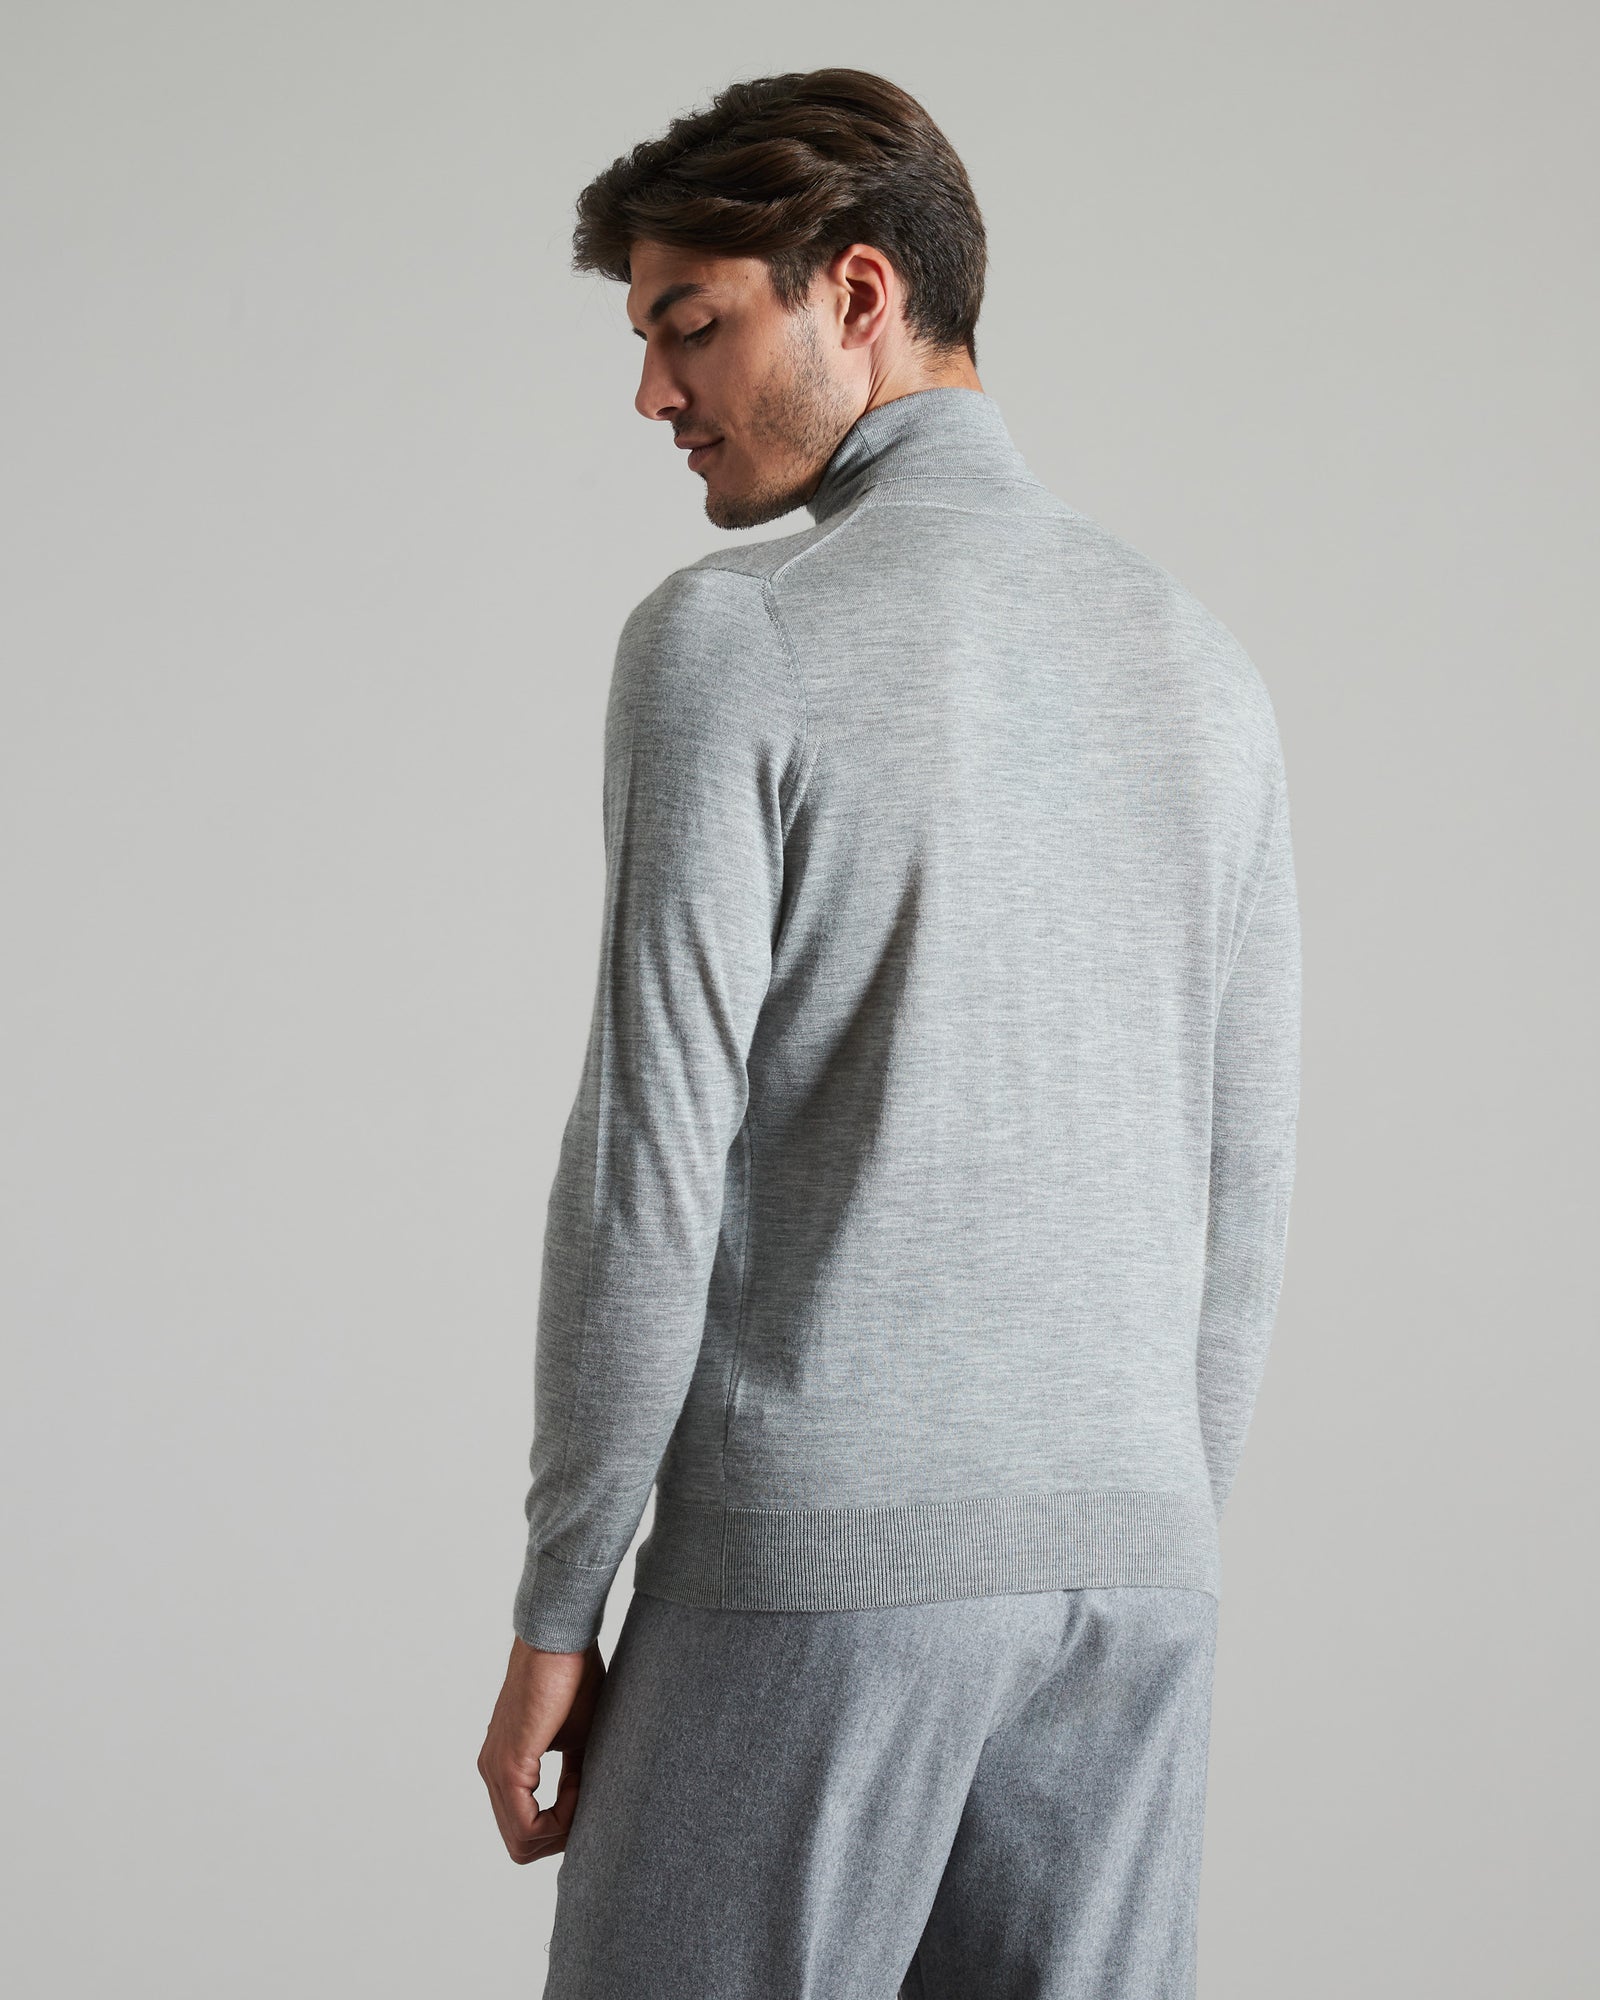 Grey cashmere and silk men's turtleneck sweater